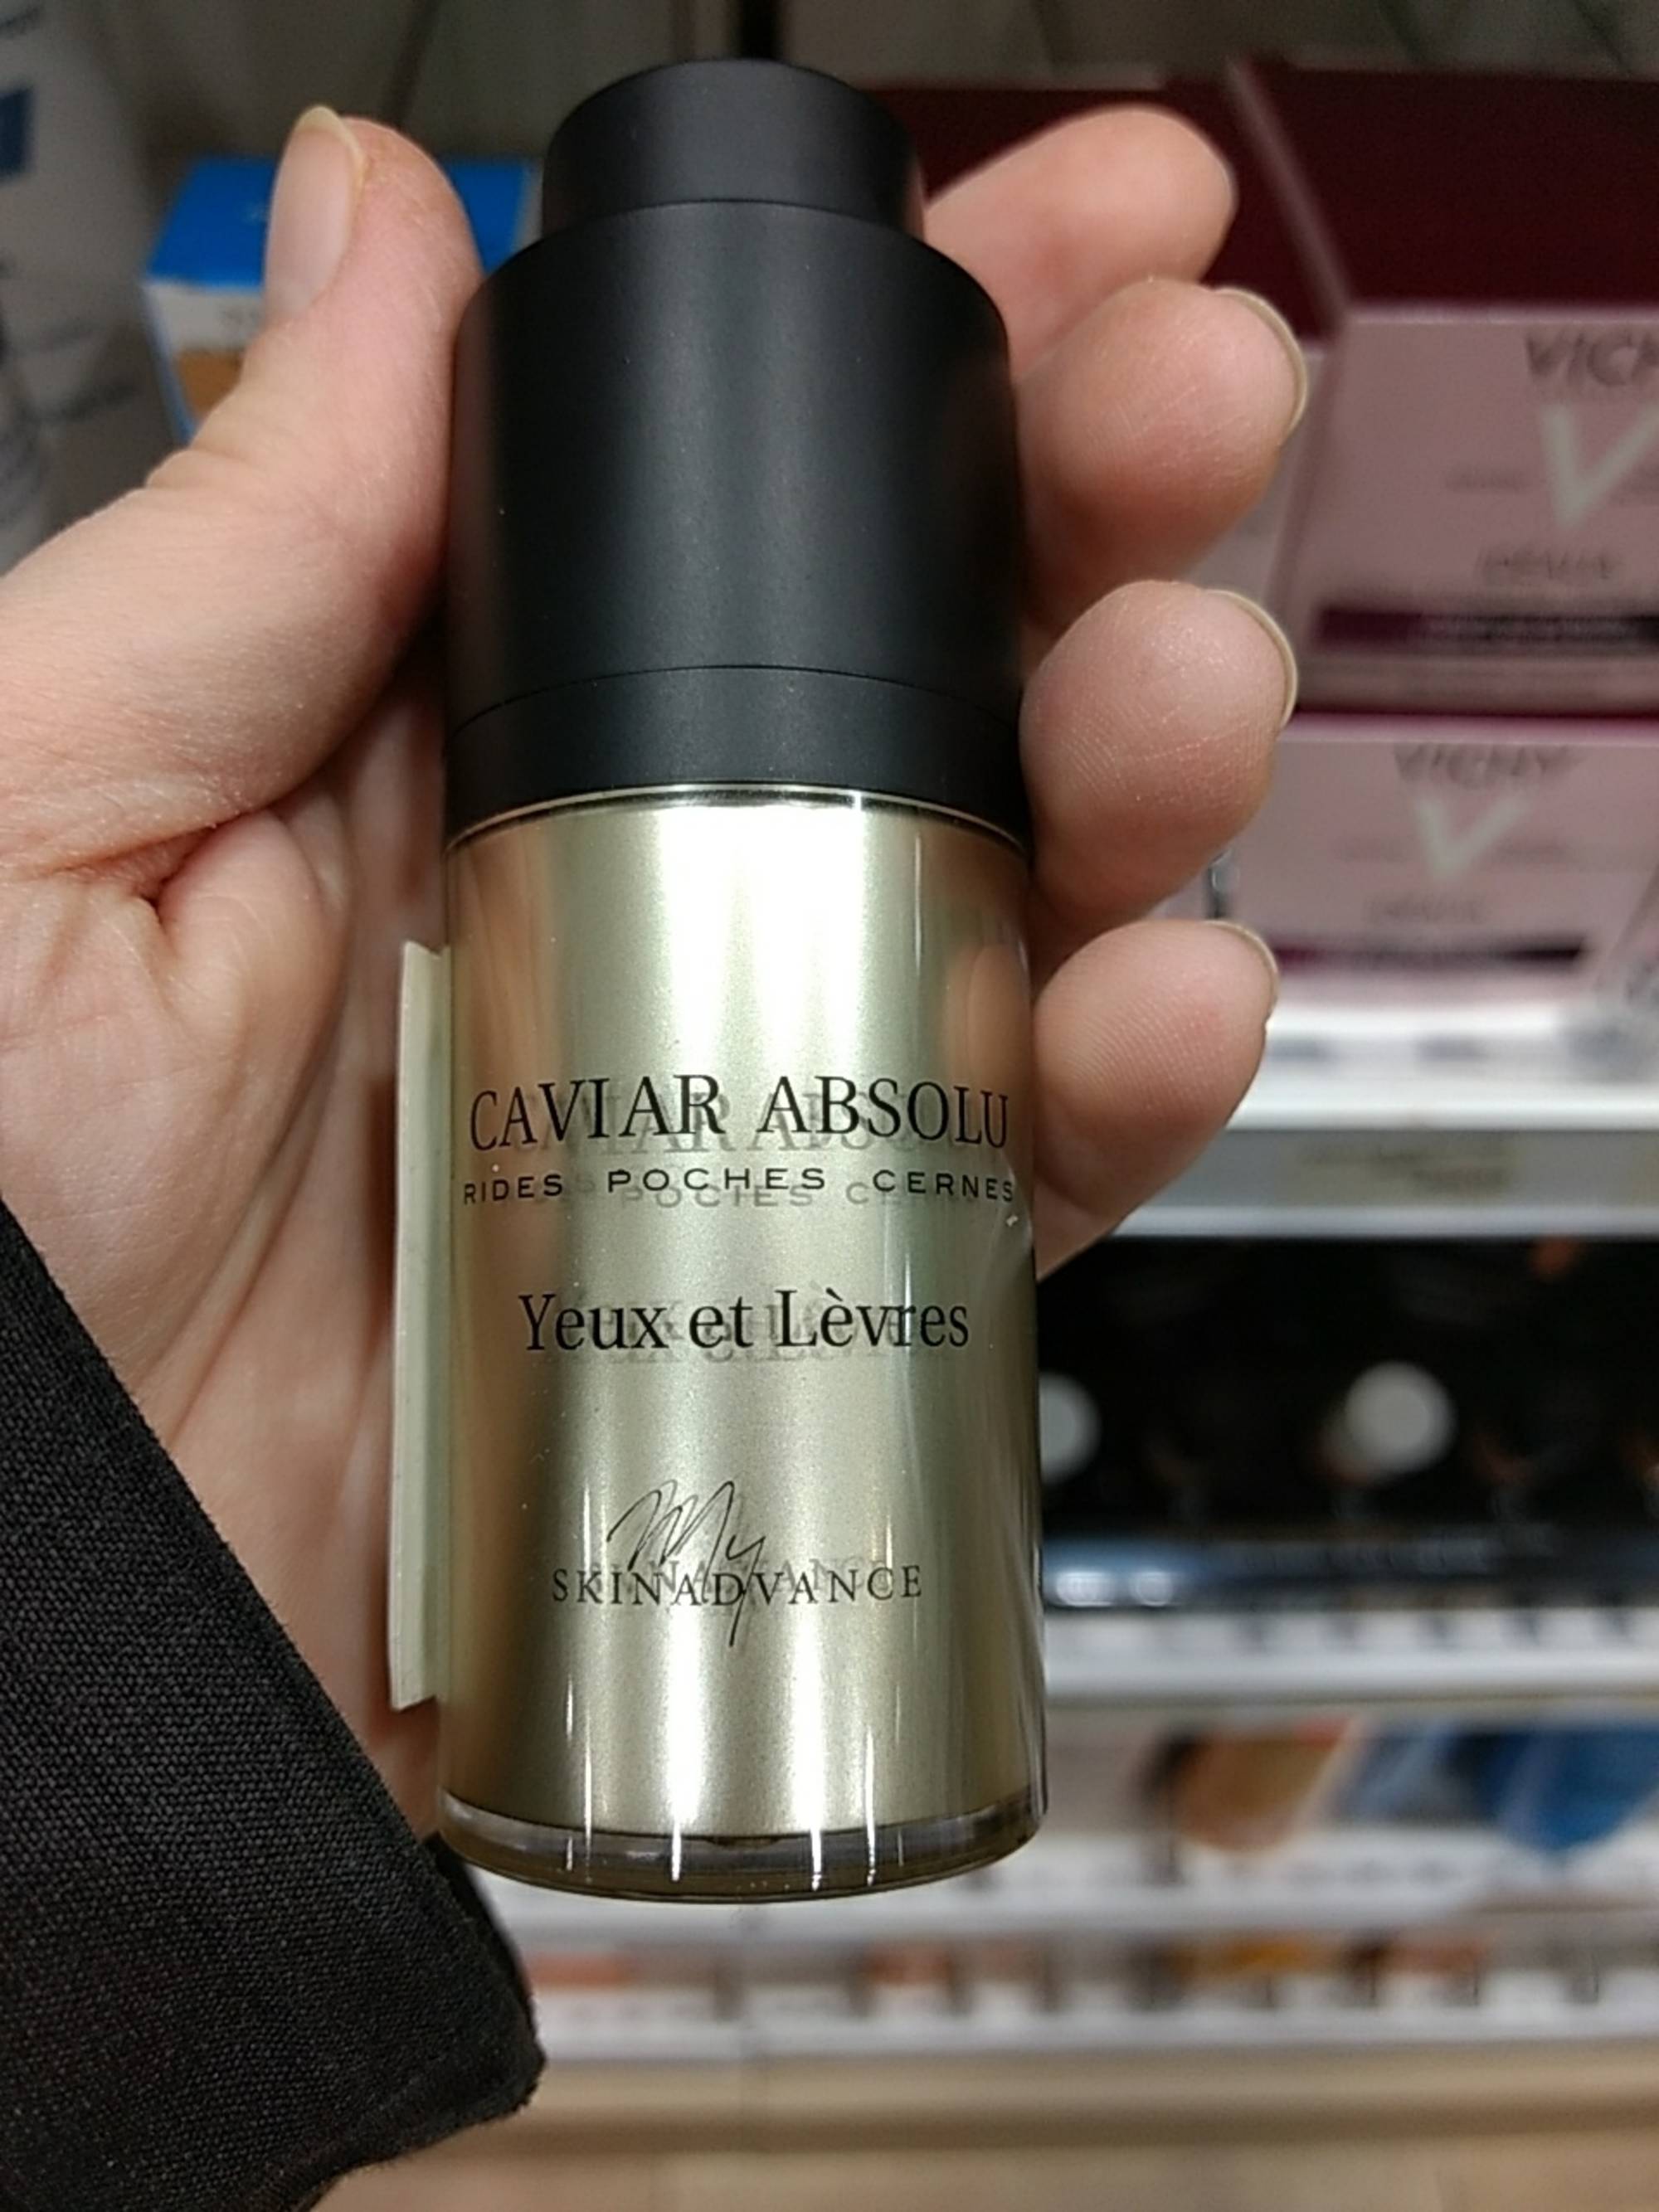 MY SKINADVANCE - Caviar absolu - Yeux et lèvres 